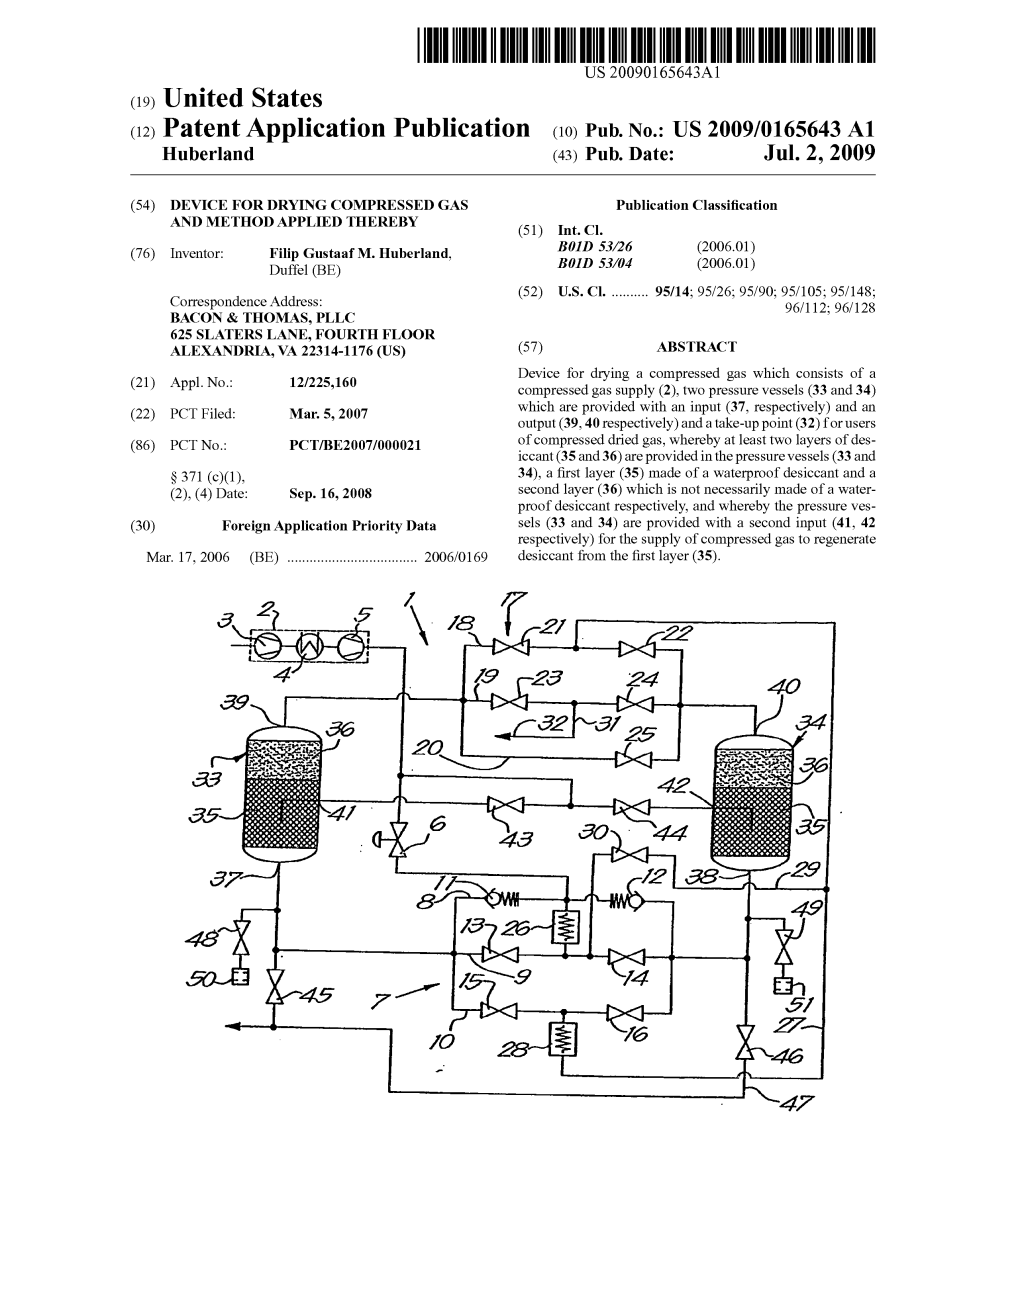 (12) Patent Application Publication (10) Pub. No.: US 2009/0165643 A1 Huberland (43) Pub